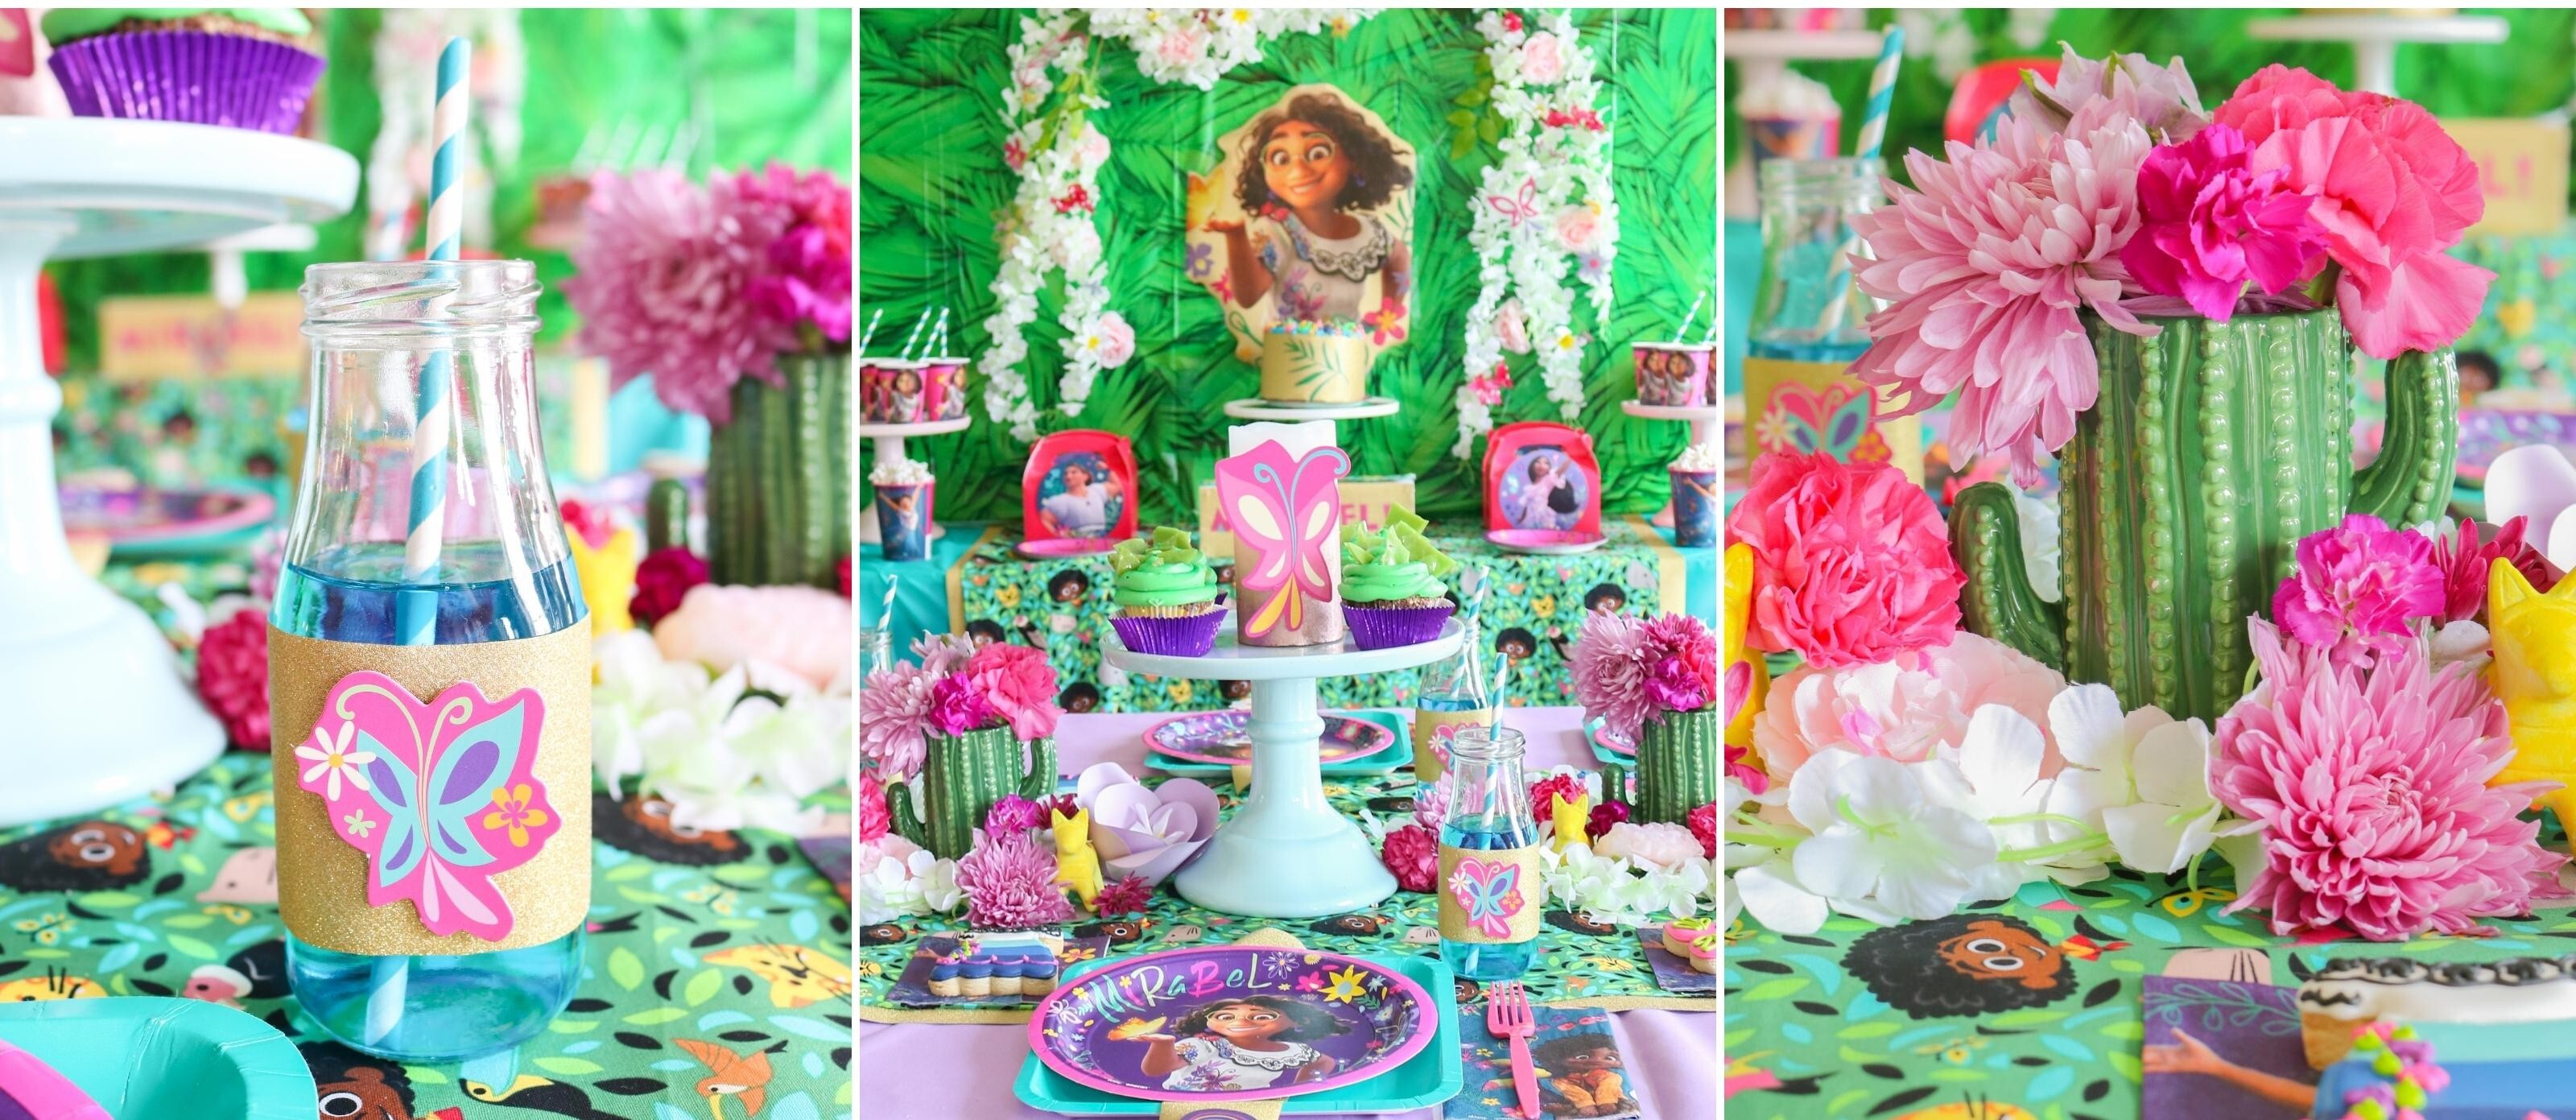 Birthday Cake Purple Tone Birthday Party Craft DIY Table Decor Confetti